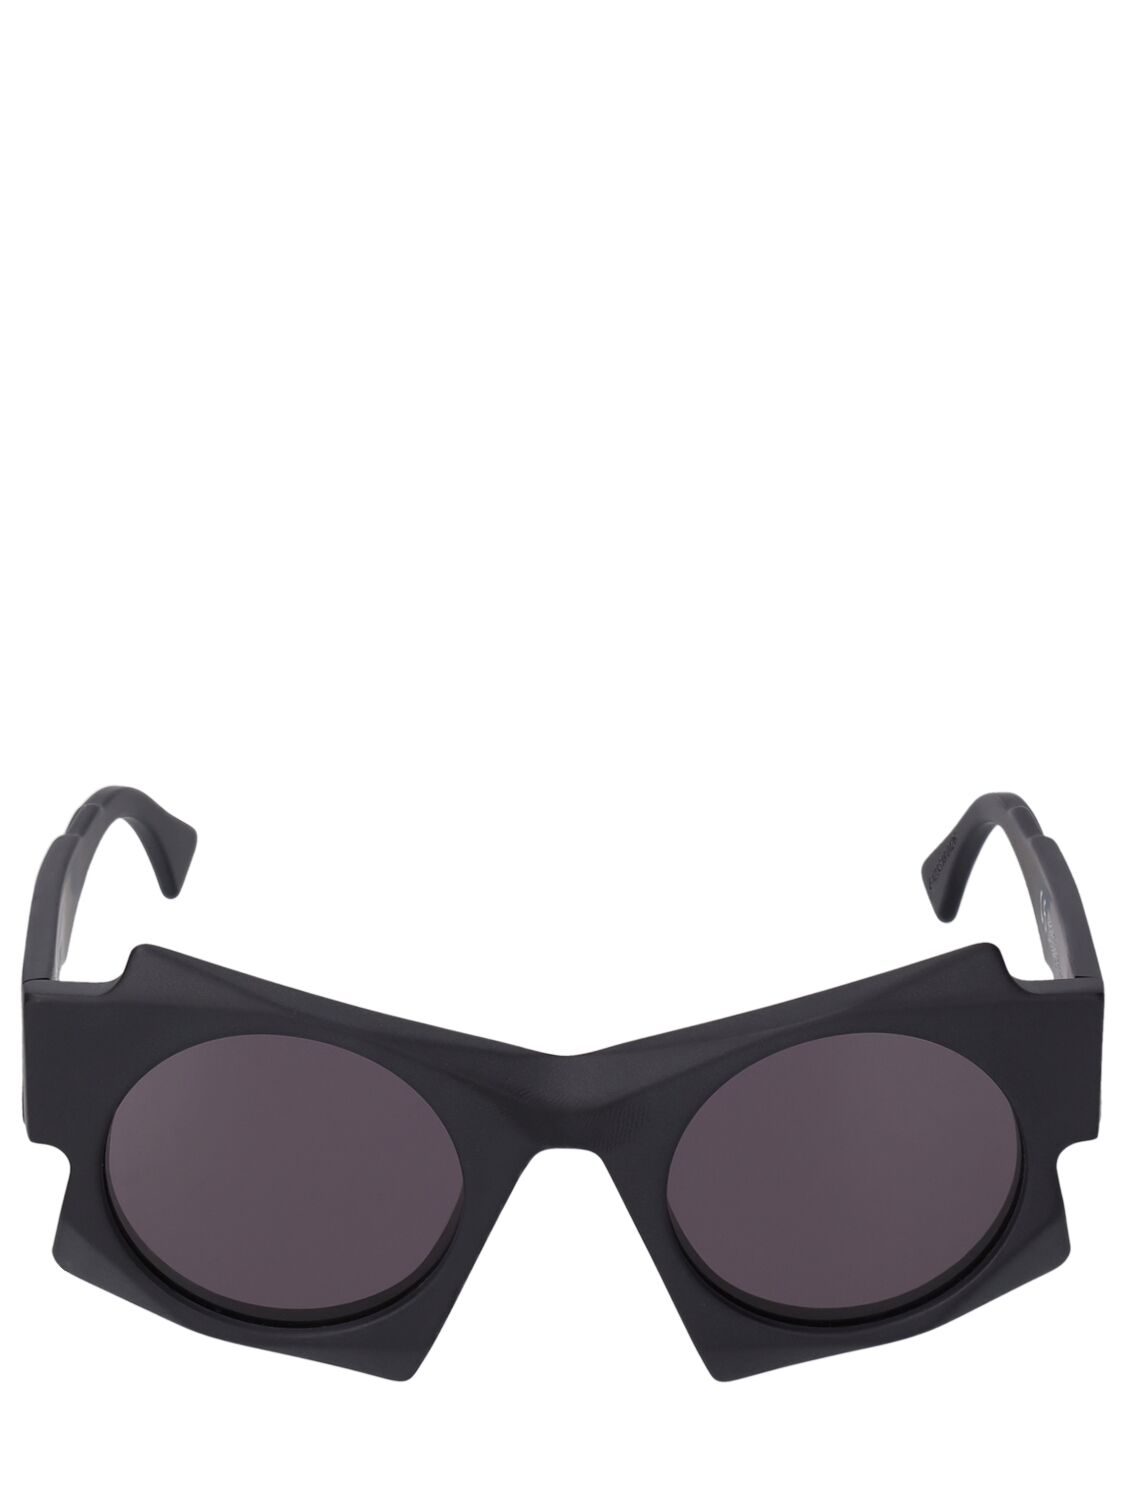 Image of U5 Squared Acetate Sunglasses